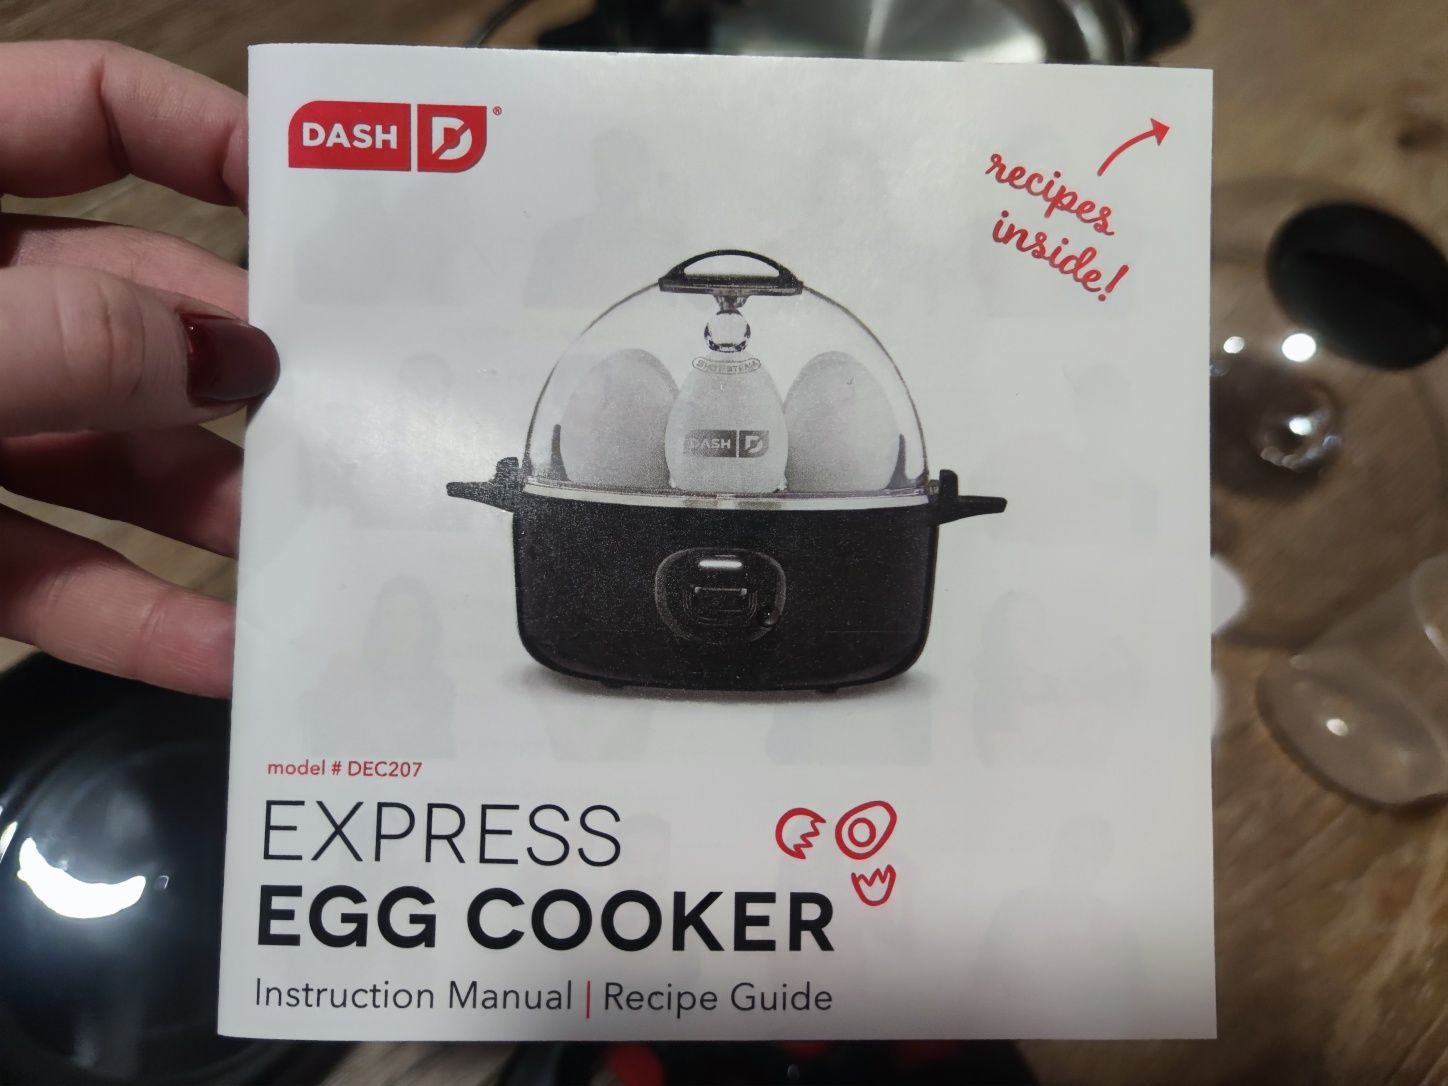 DASH DEC207 Express Egg Cooker Instruction Manual